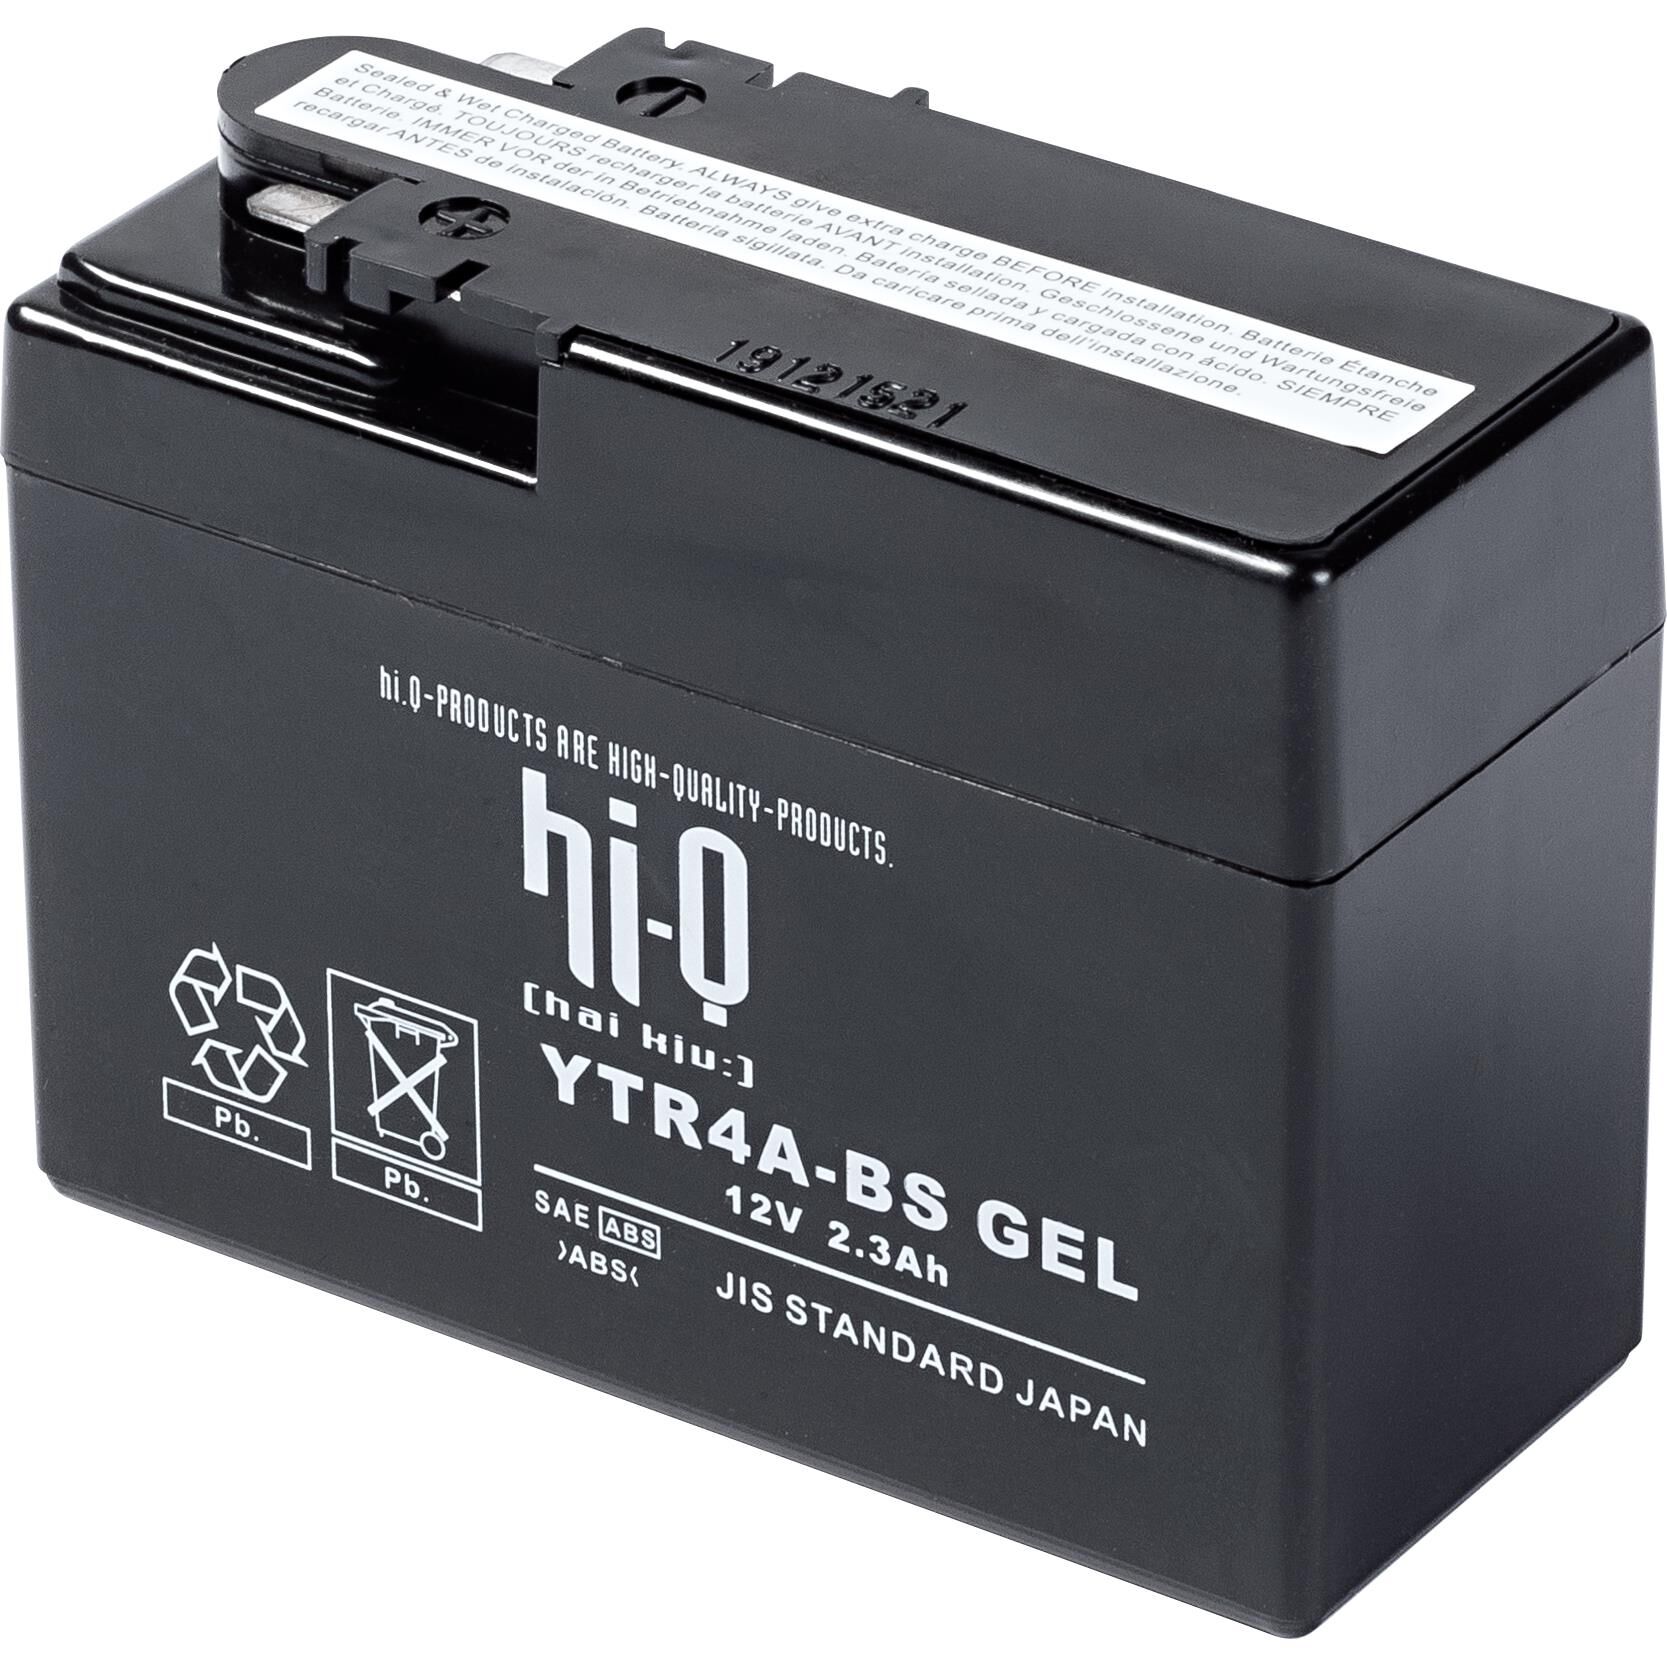 Hi-Q Batterie AGM Gel geschlossen HTR4A, 12V, 2,3Ah (YTR4A) von Hi-Q